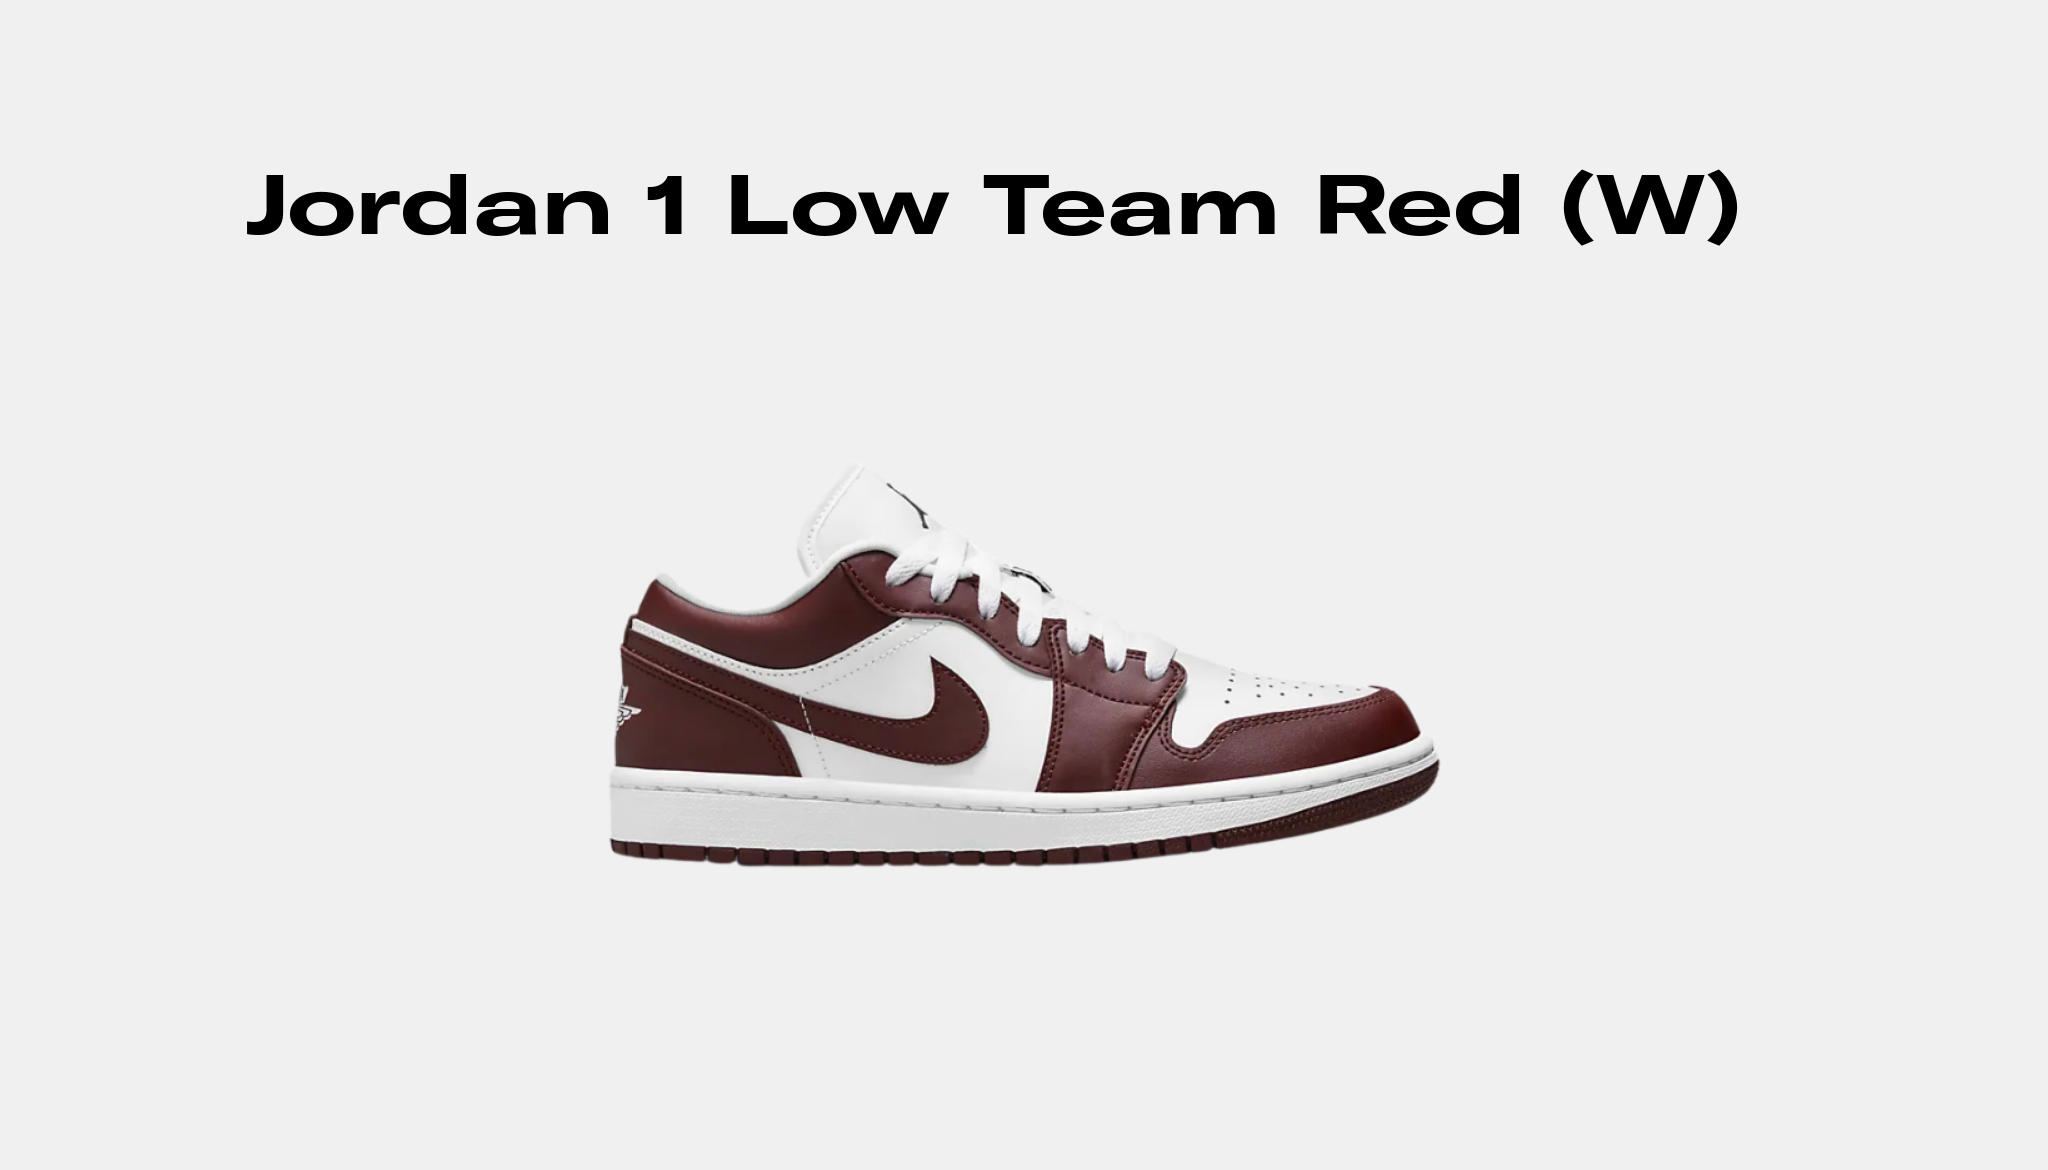 Jordan 1 Low Team Red (W), Raffles and Release Date | Sole Retriever